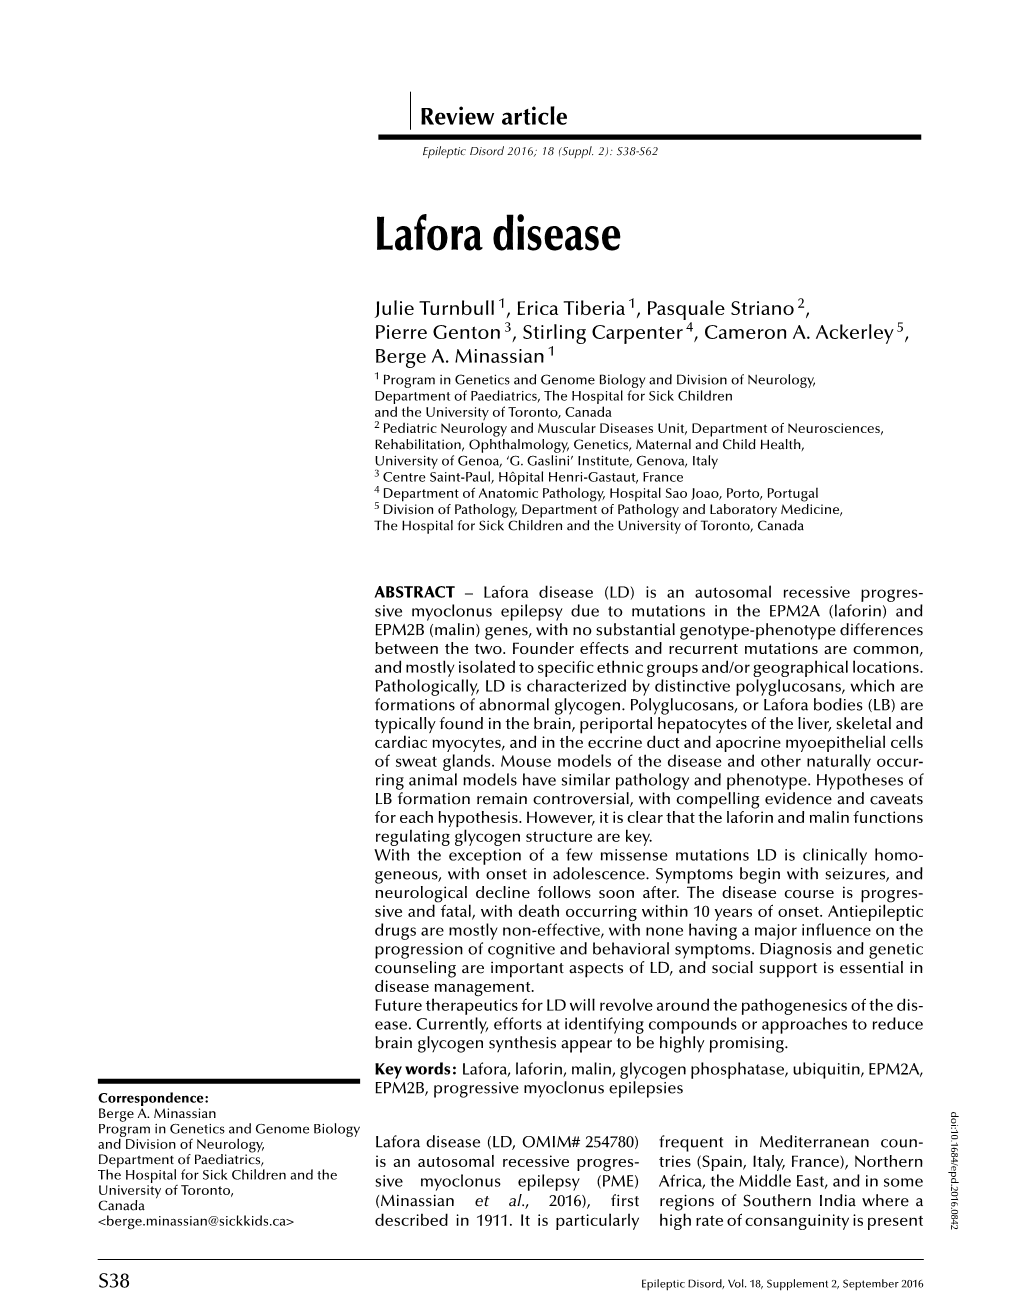 Lafora Disease